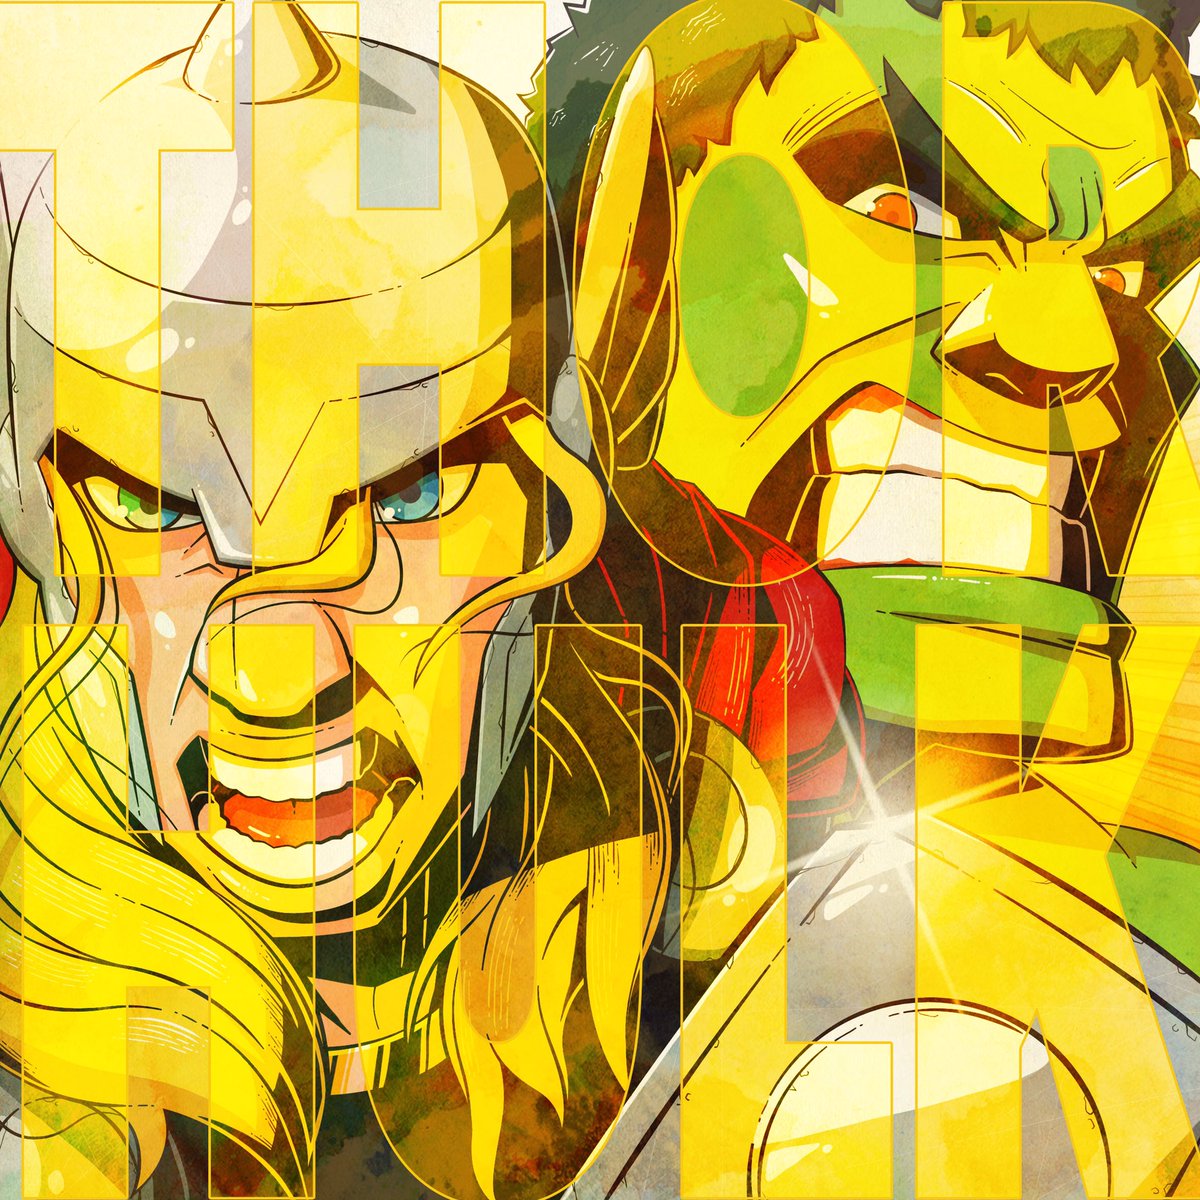 Rob ロブ 神様と超人 Thor Hulk Marvel Hero Comic Illustration Art Drawing Paint Fanart マイティソー ソー ハルク マーベル ヒーロー アメコミ イラスト アート 絵 ファンアート T Co Po2aslzdll